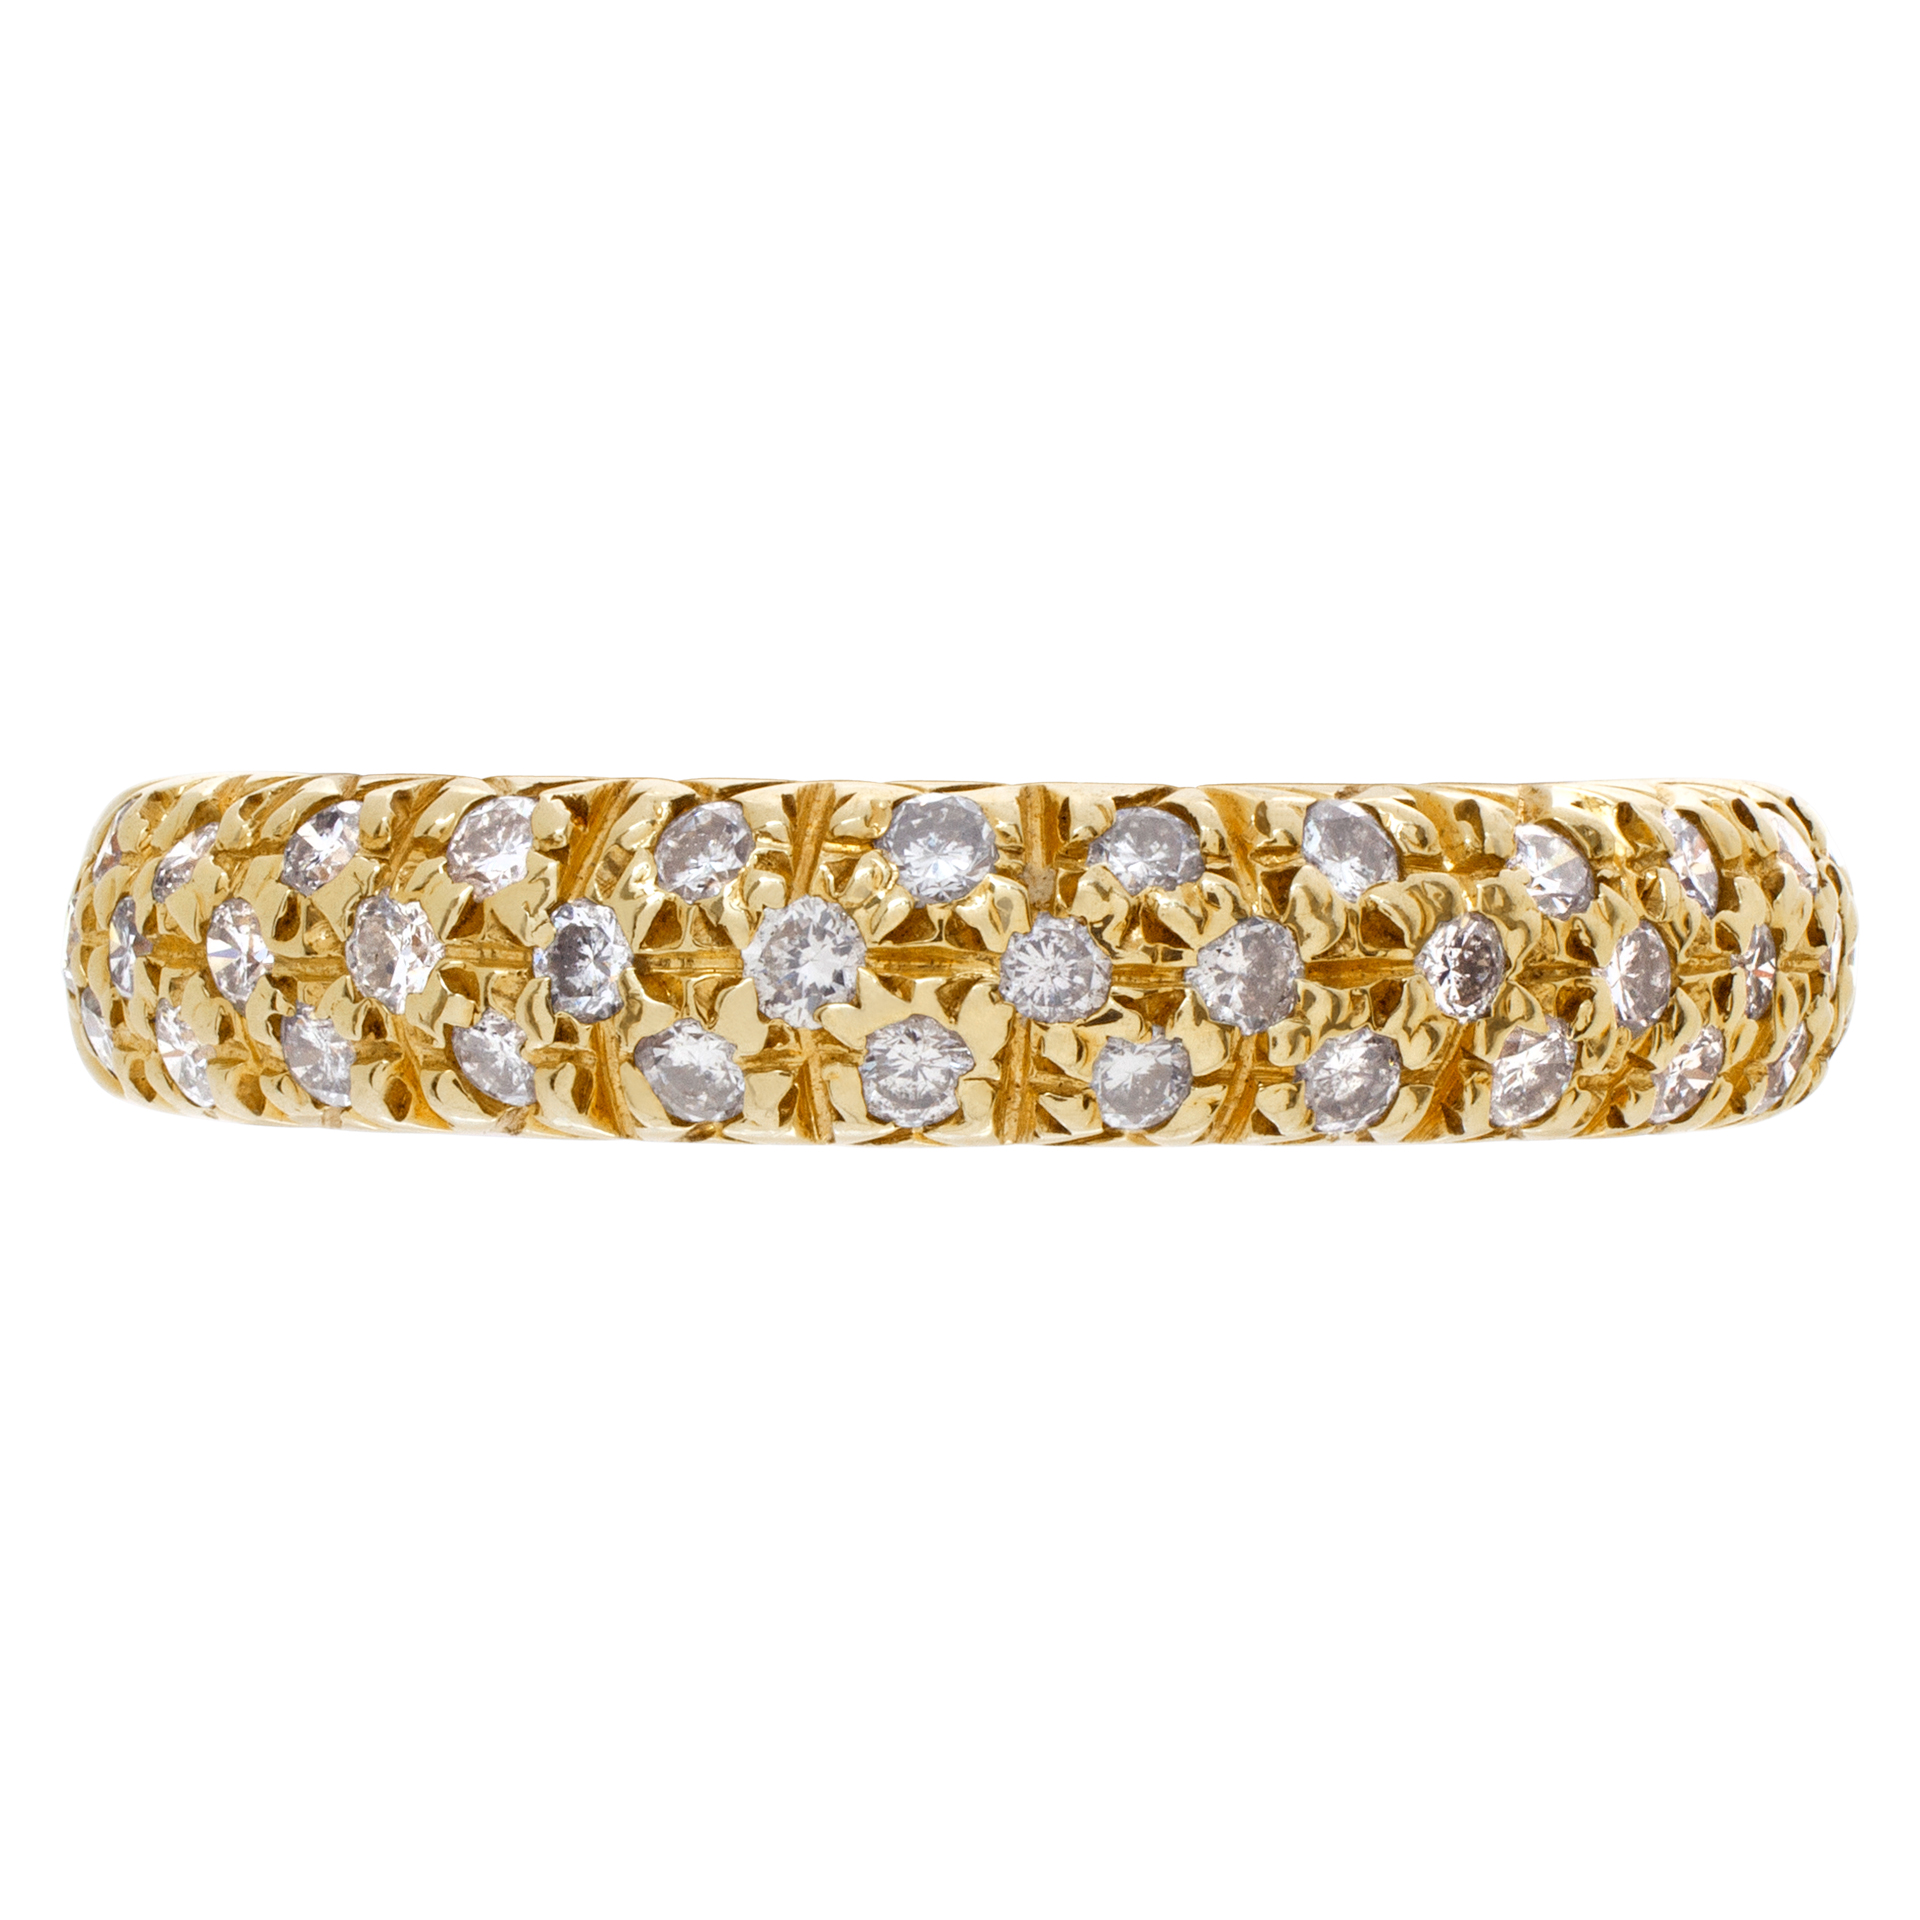 Precious pavé diamond band in 14k yellow gold. 0.80 carats in diamonds. Size 6 image 2